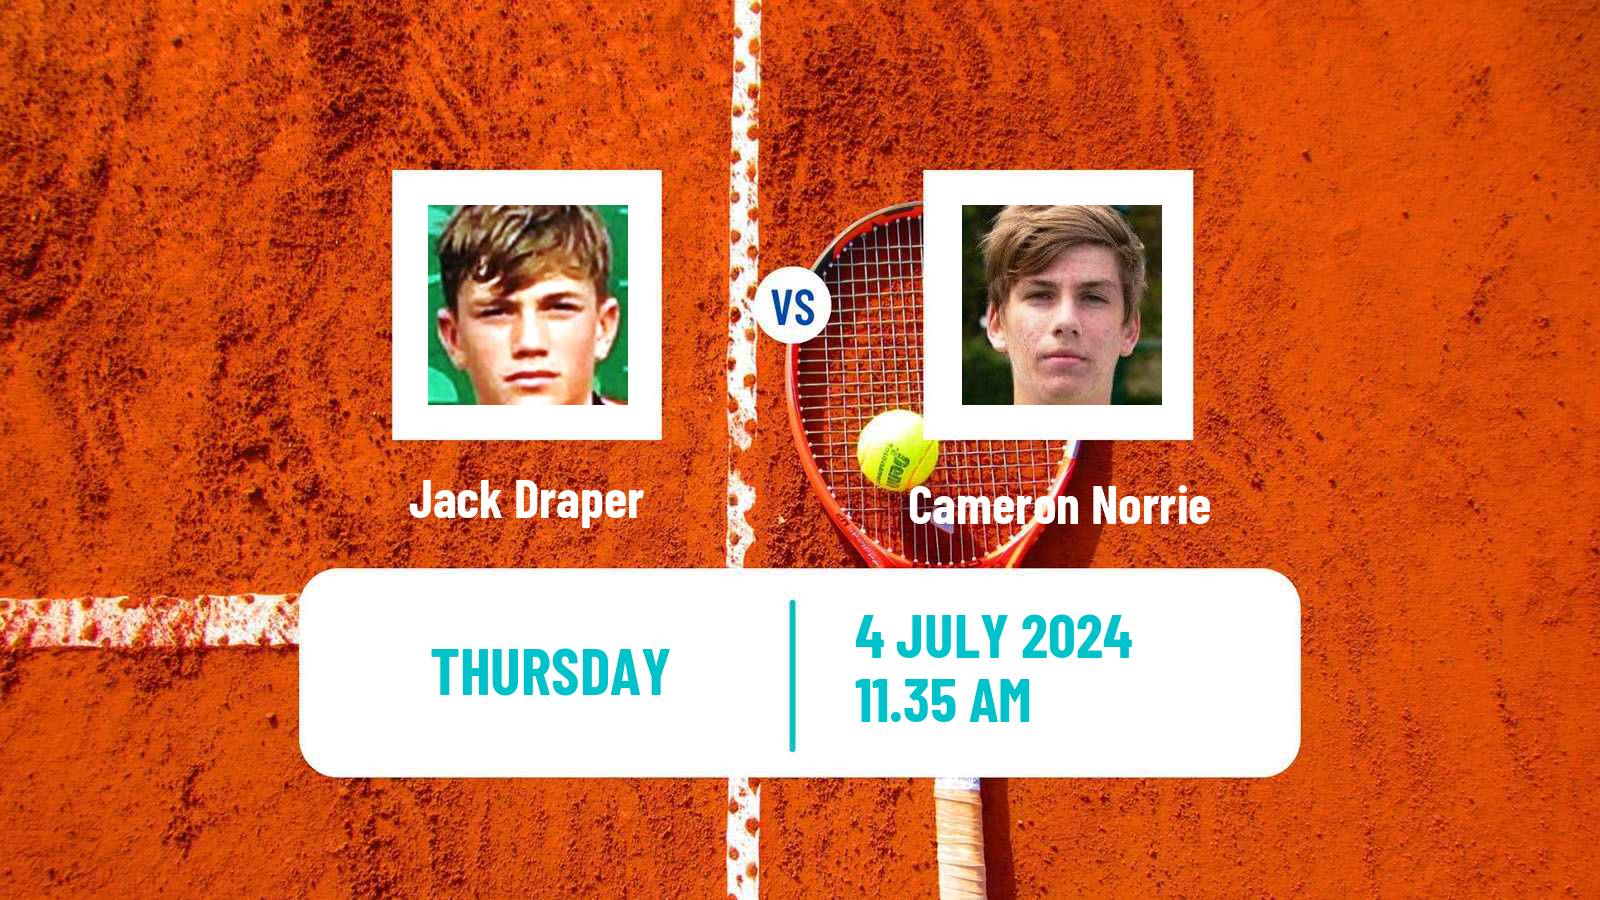 Tennis ATP Wimbledon Jack Draper - Cameron Norrie